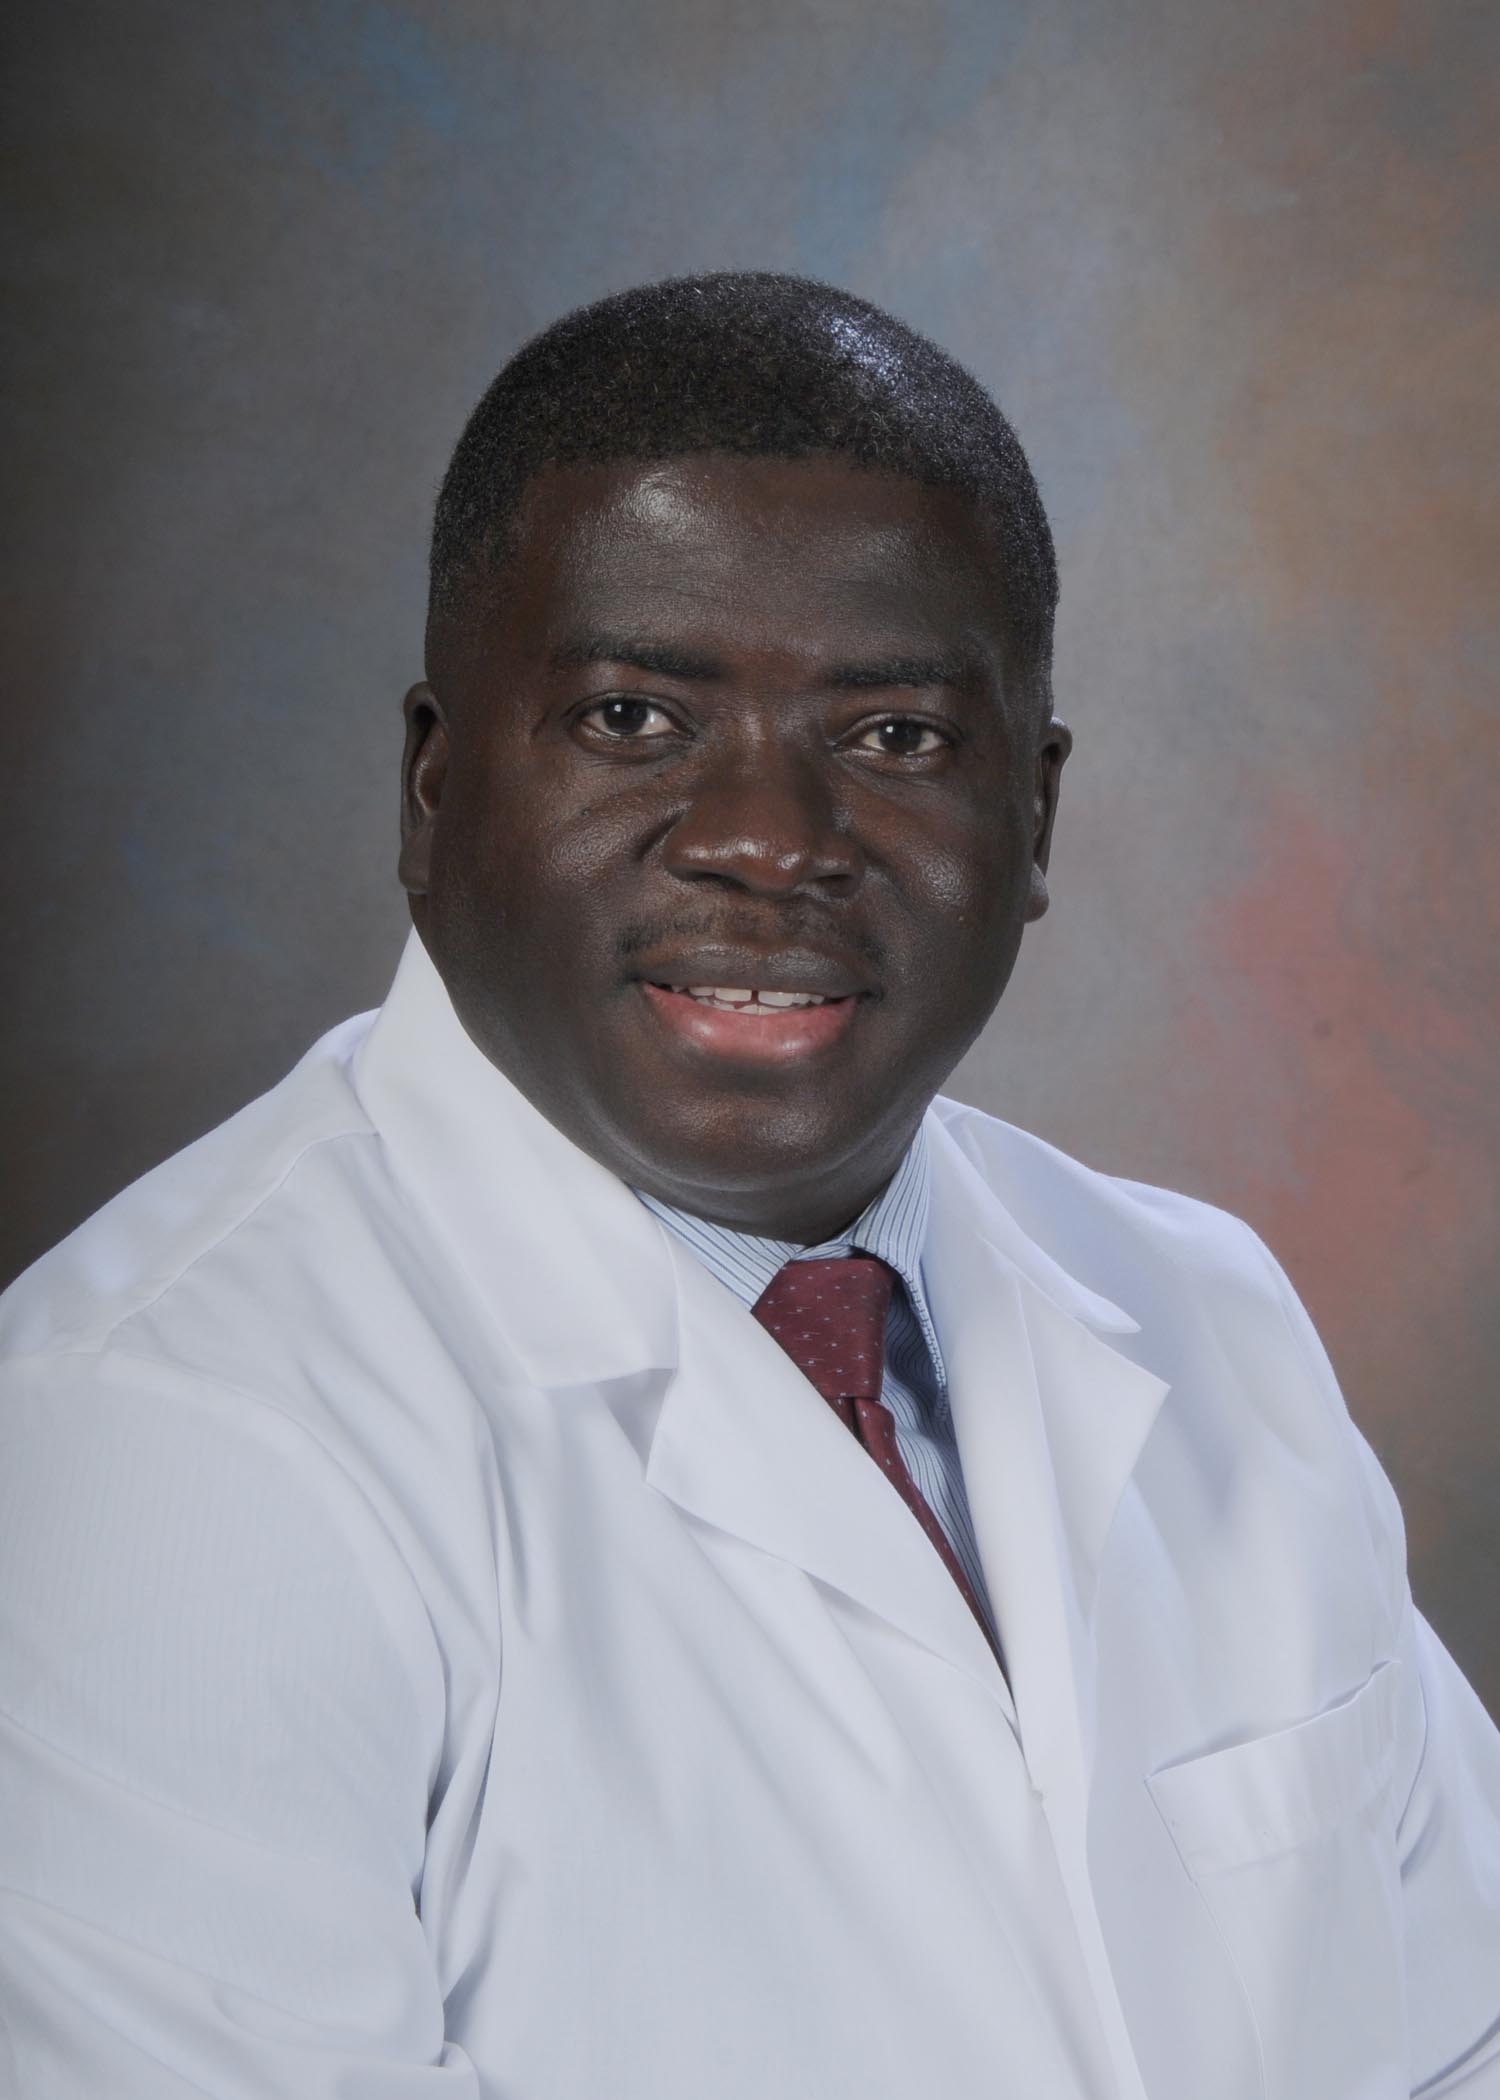 Dr Joseph Wangeh Joins Mcleod Pediatrics Dillon The Dillon Herald